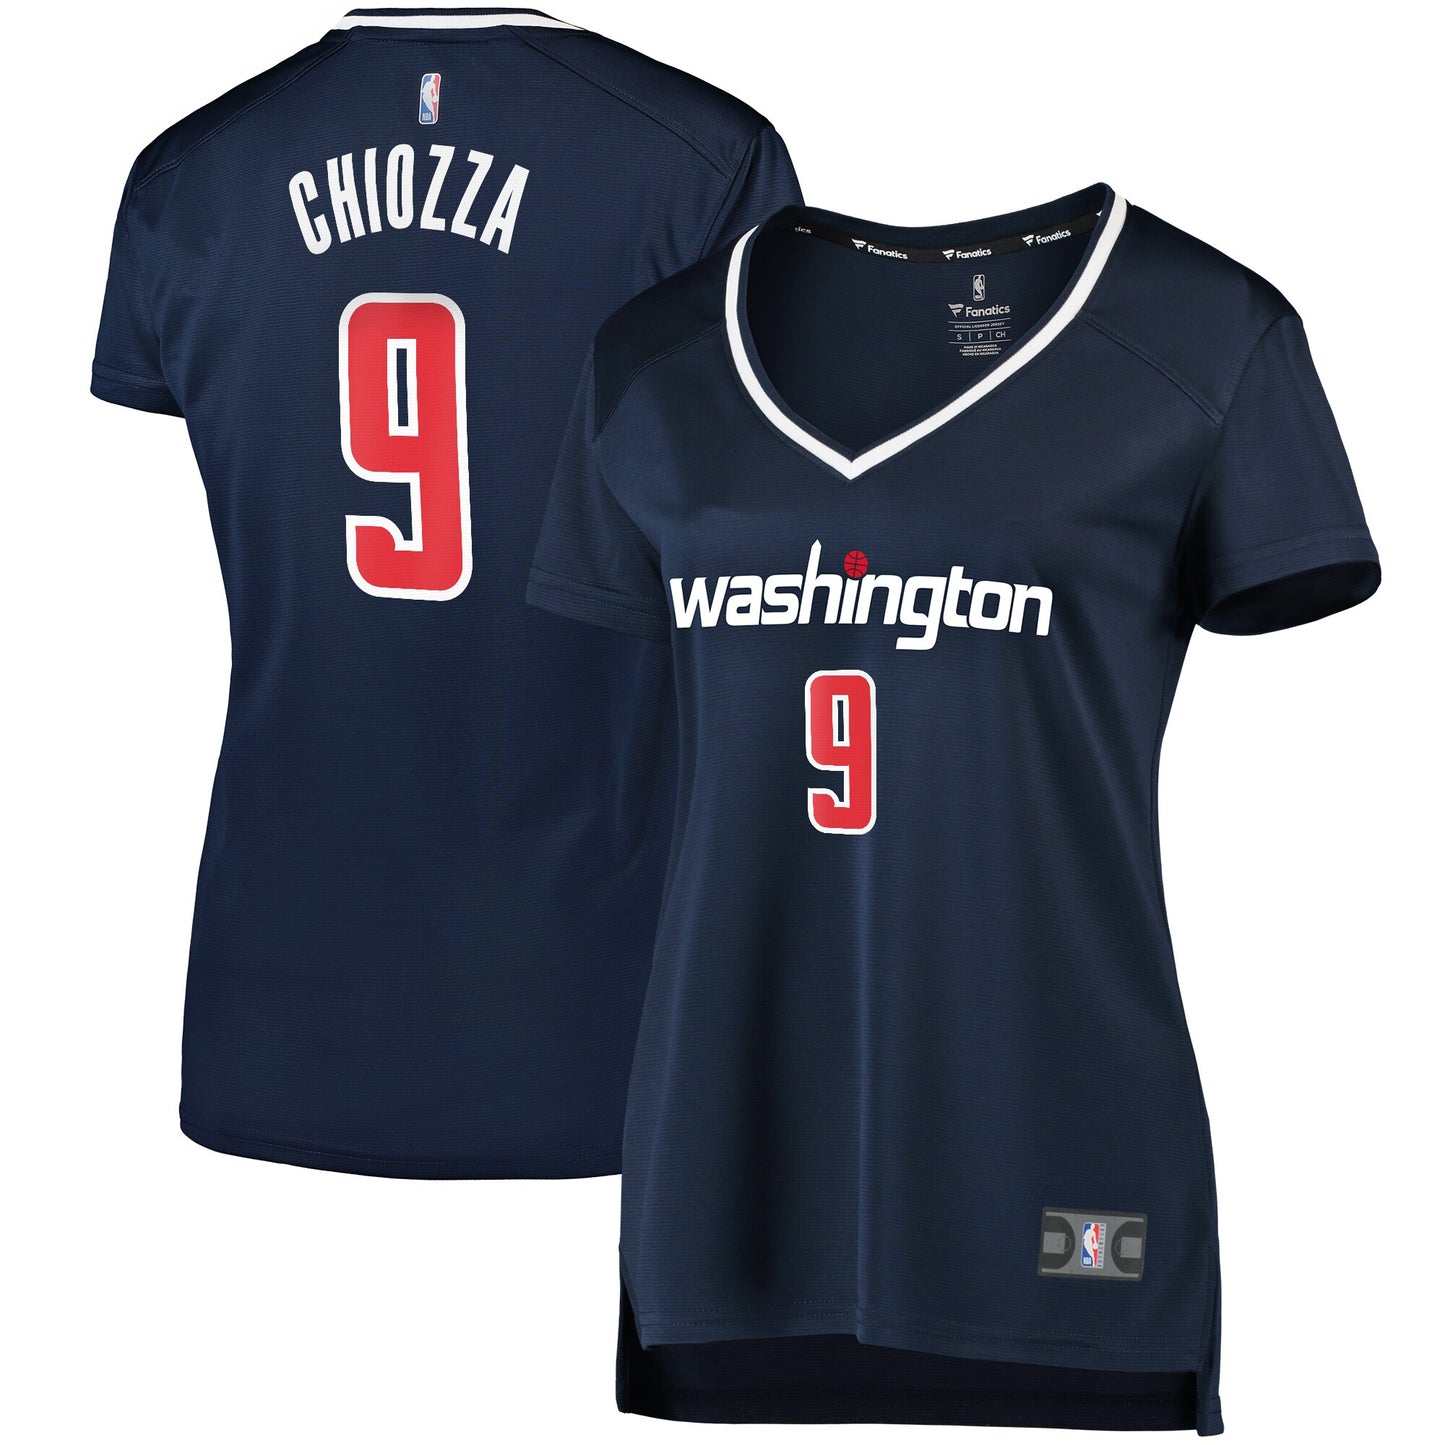 Chris Chiozza Washington Wizards Fanatics Branded Women's Fast Break Player Jersey - Statement Edition - Navy